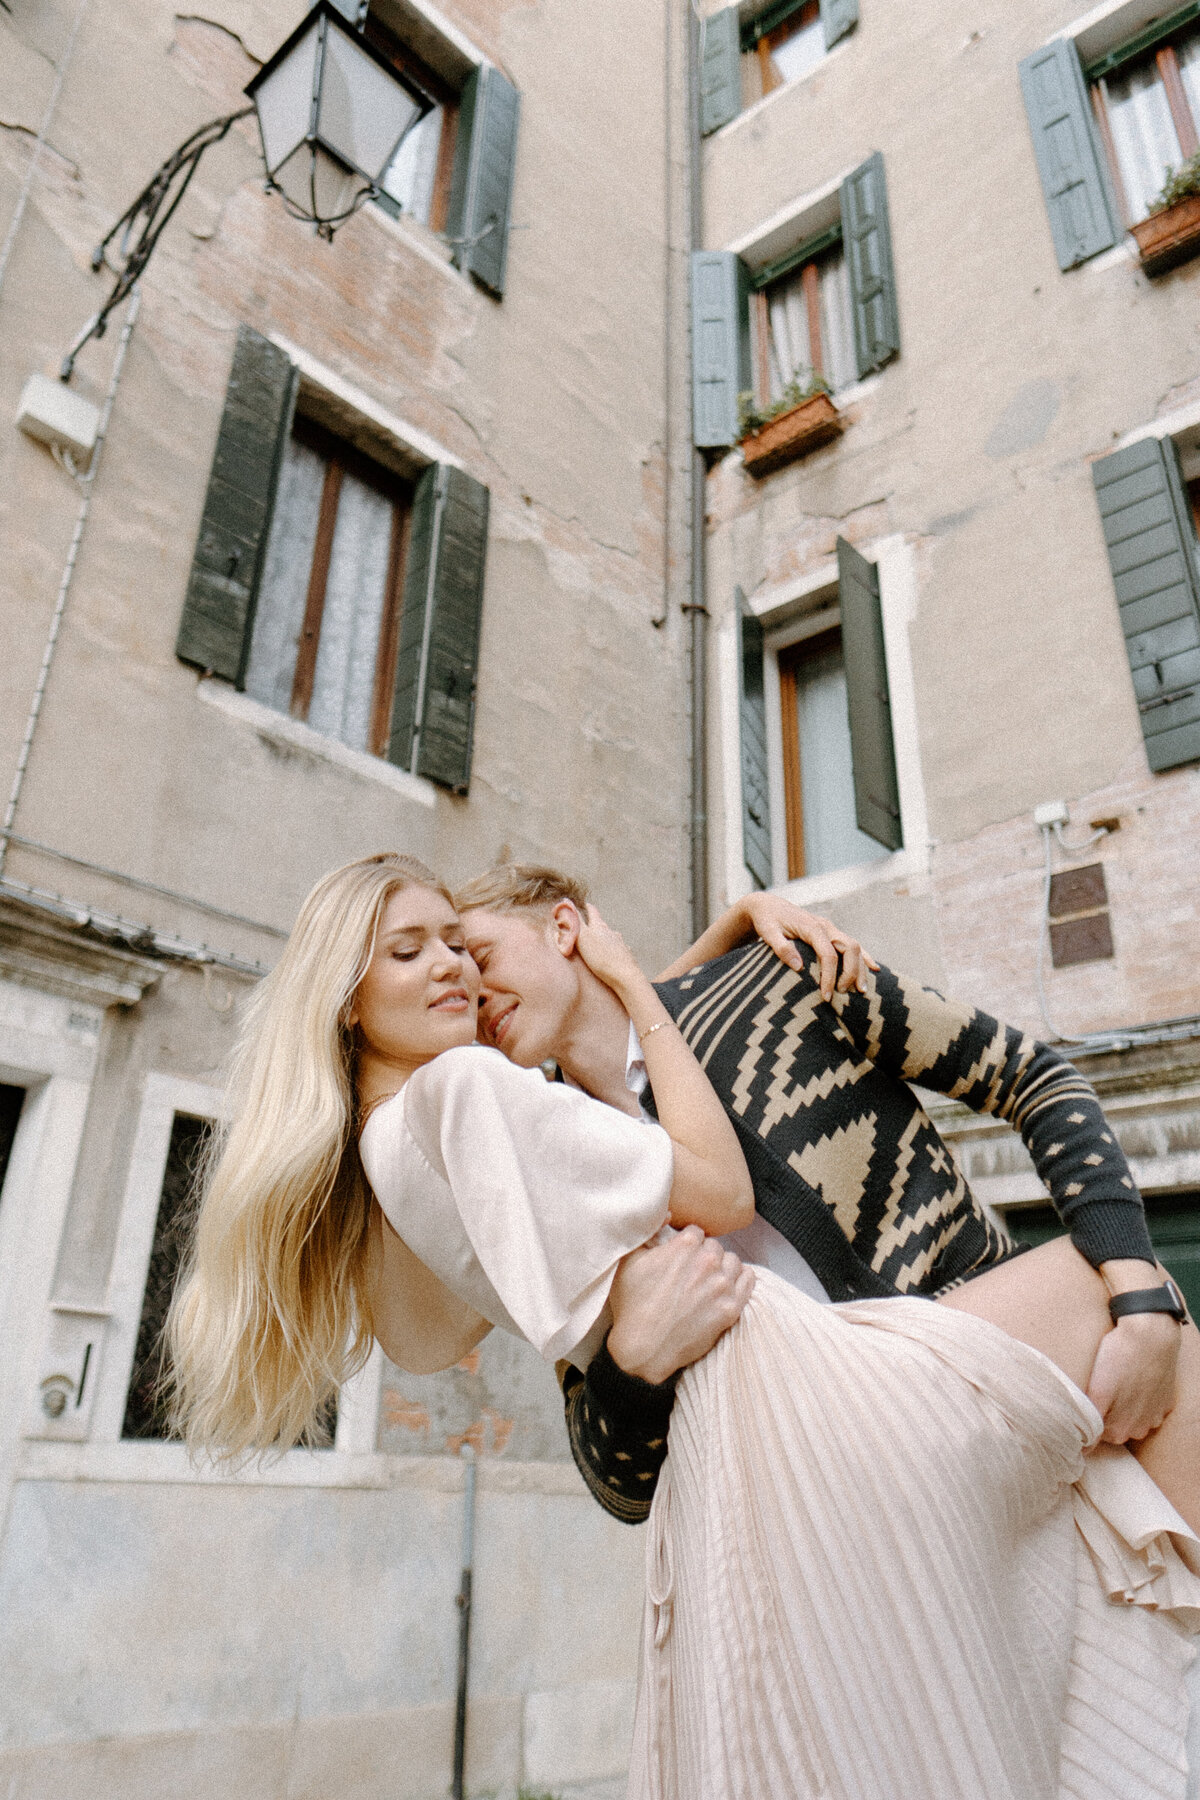 Documentary-Style-Editorial-Vogue-Italy-Destination-Wedding-Leah-Gunn-Photography-31